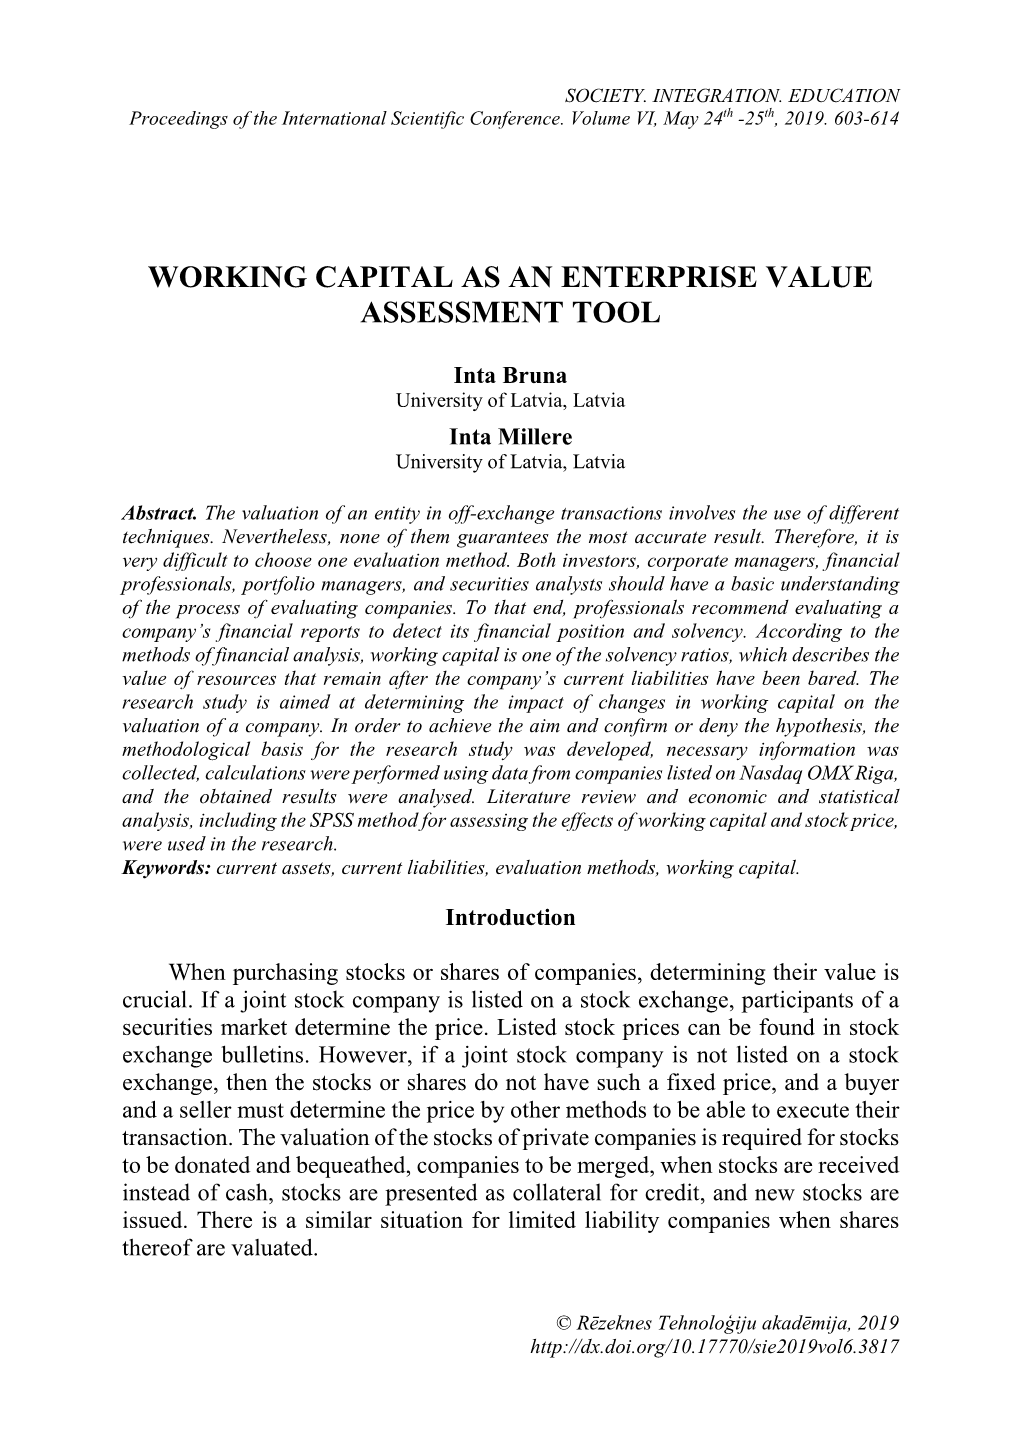 Working Capital As an Enterprise Value Assessment Tool